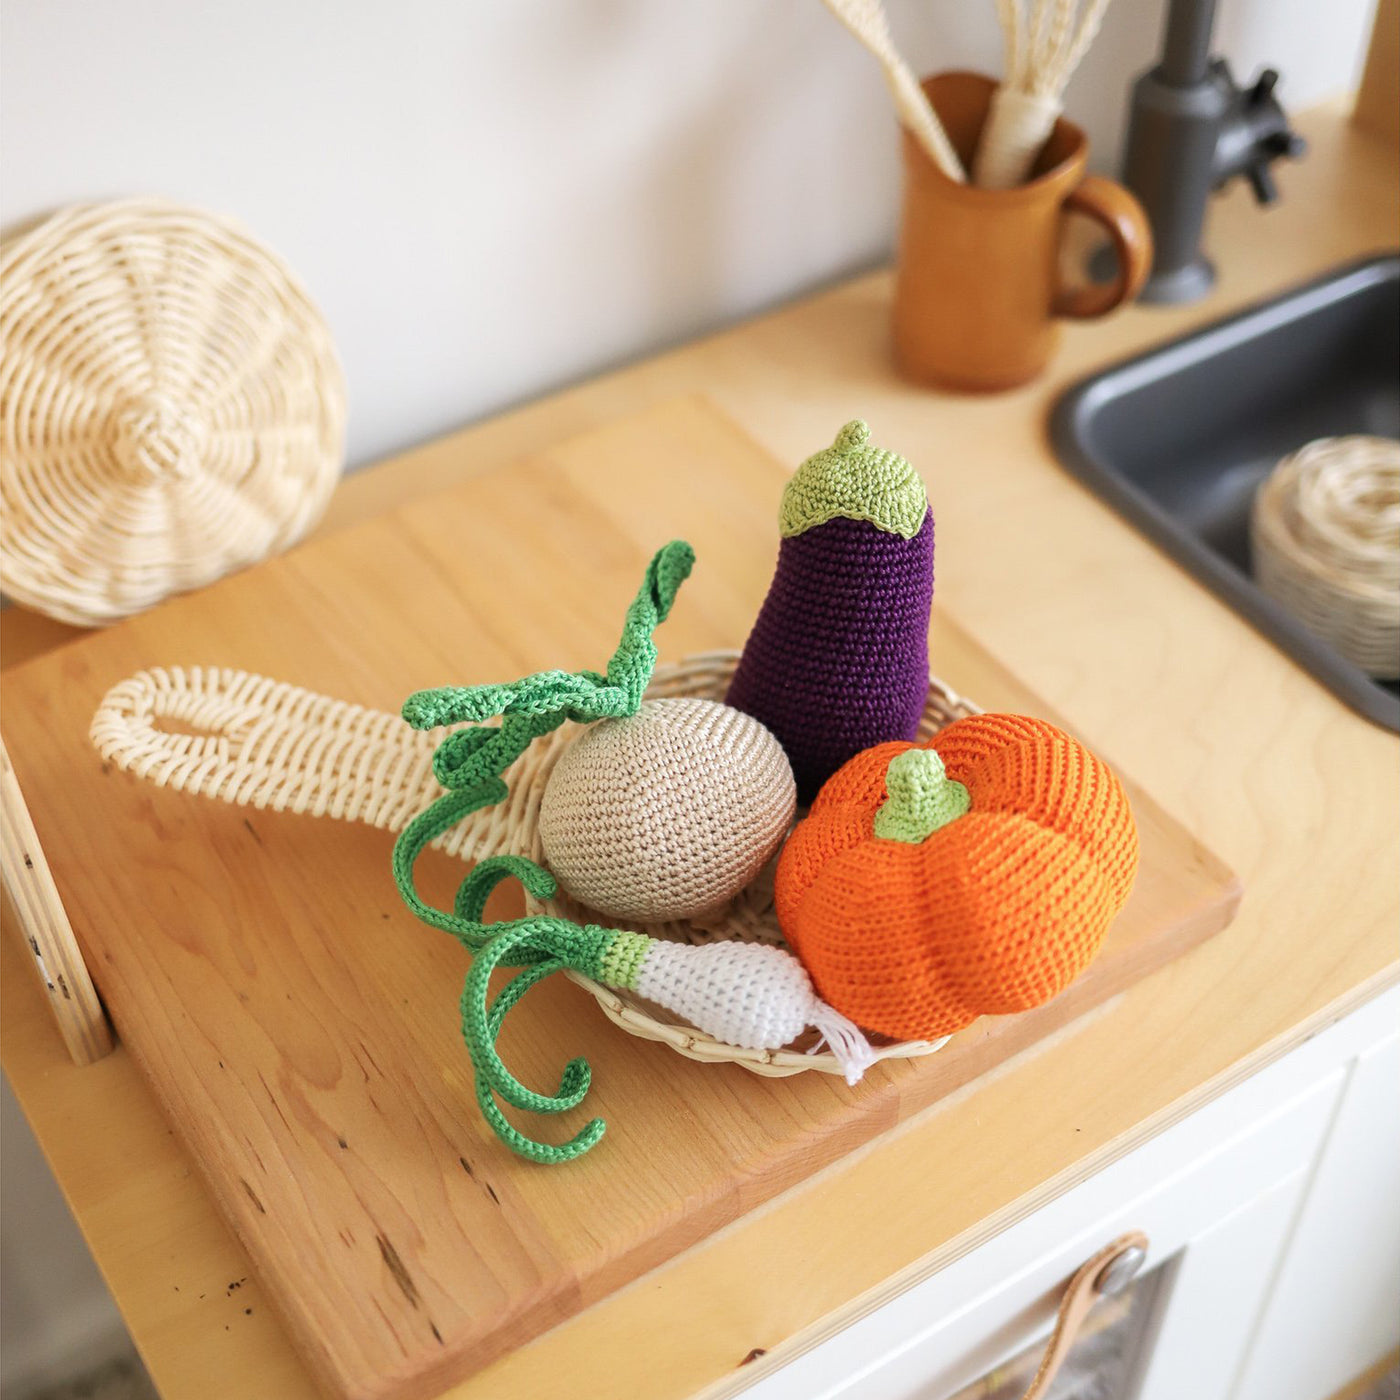 Garden Vegetable Toy set 1 - 4 handmade pieces